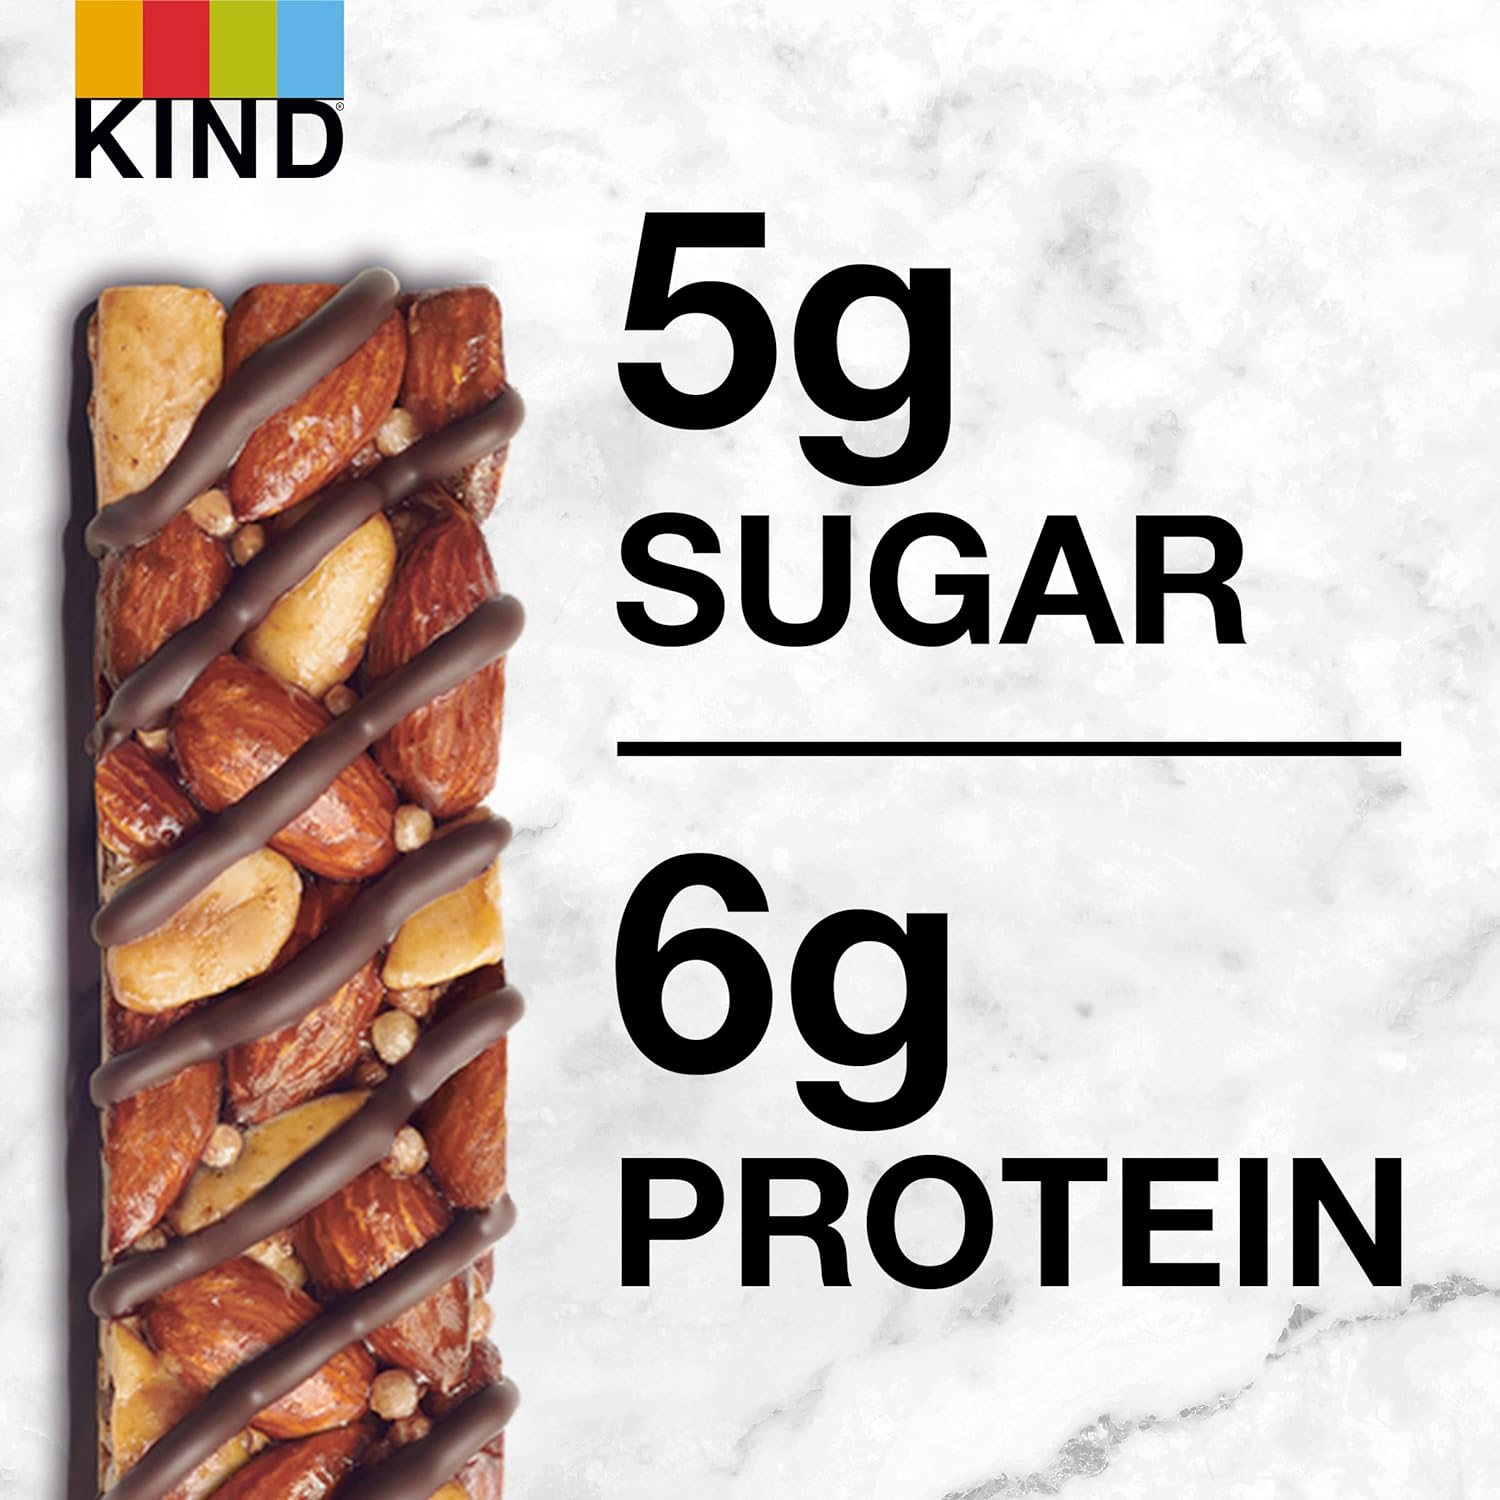 KIND Bars, Dark Chocolate Nuts and Sea Salt, Healthy Snacks, Gluten Free, Low Sugar, 6g Protein, 12 Count